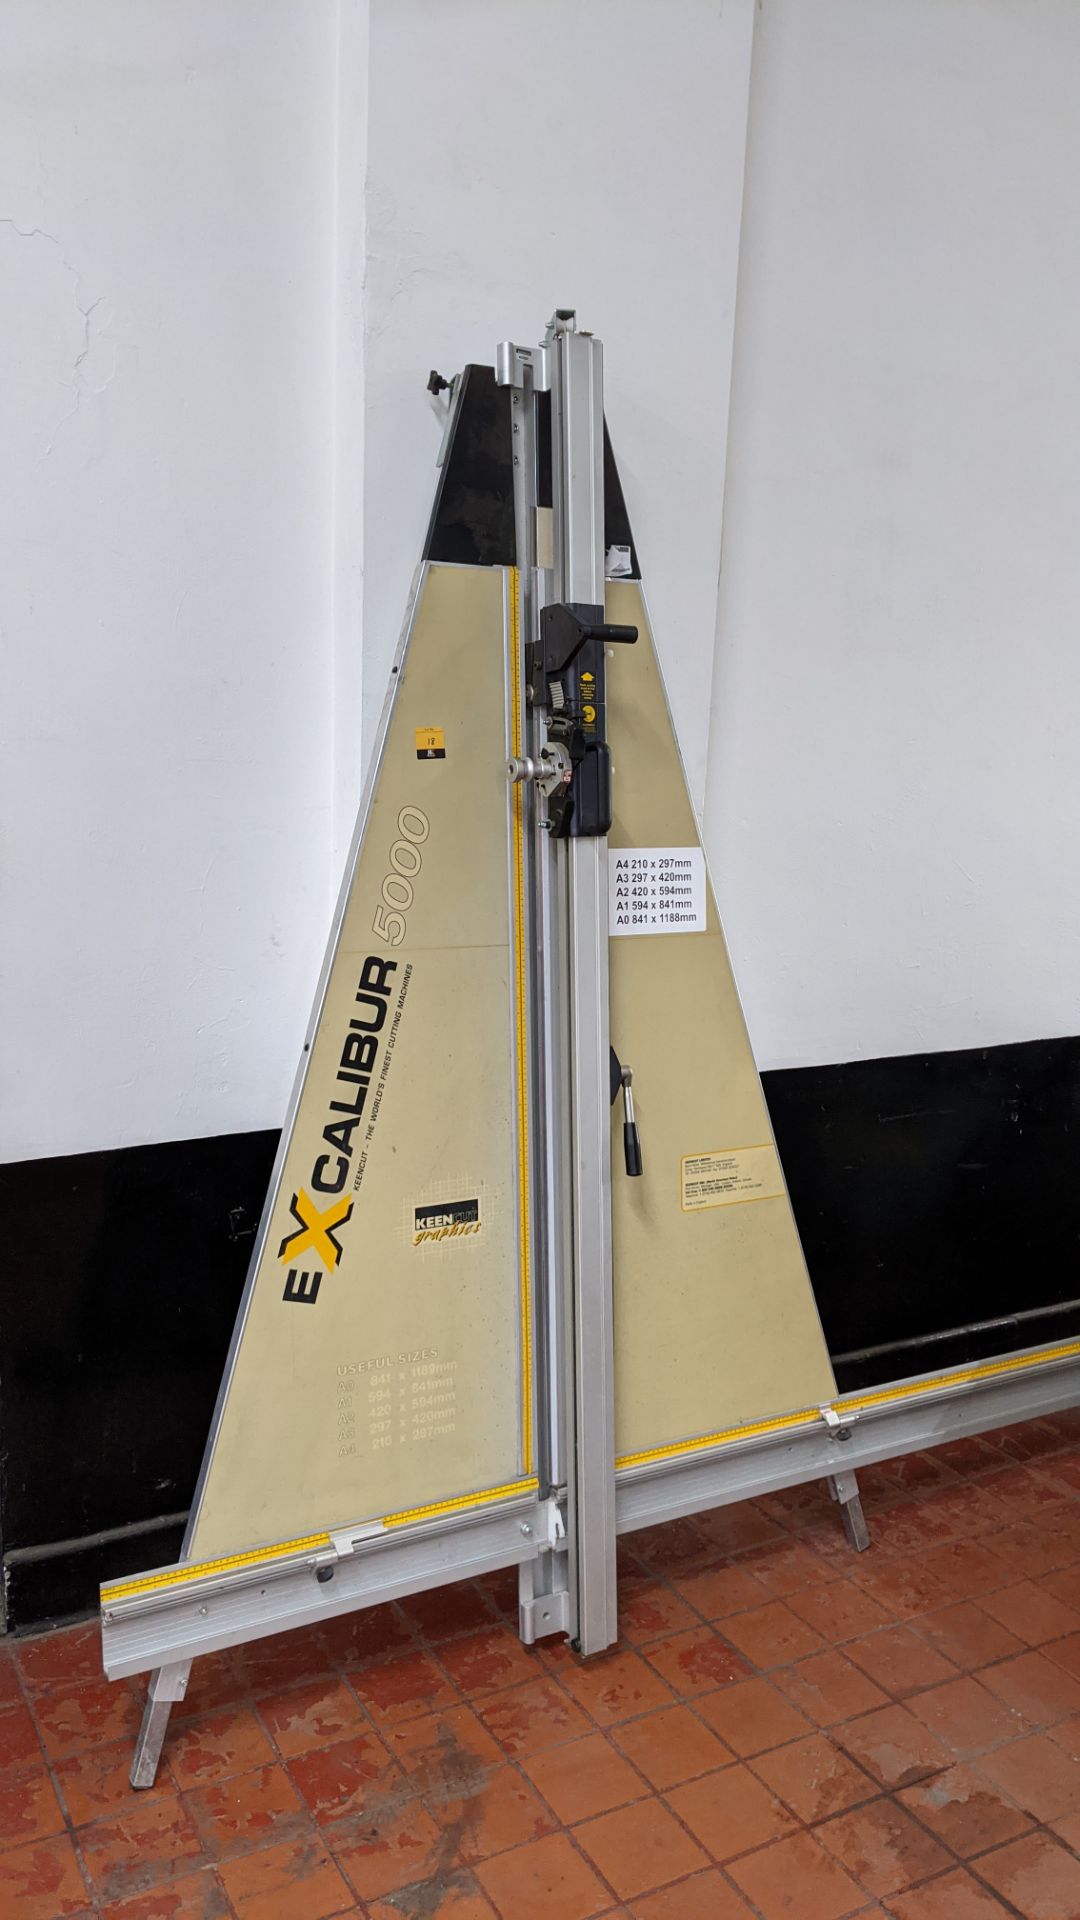 Keencut Excalibur 5000 twin cutting head guillotine, glass cutter, scorer, folder. - Image 2 of 10